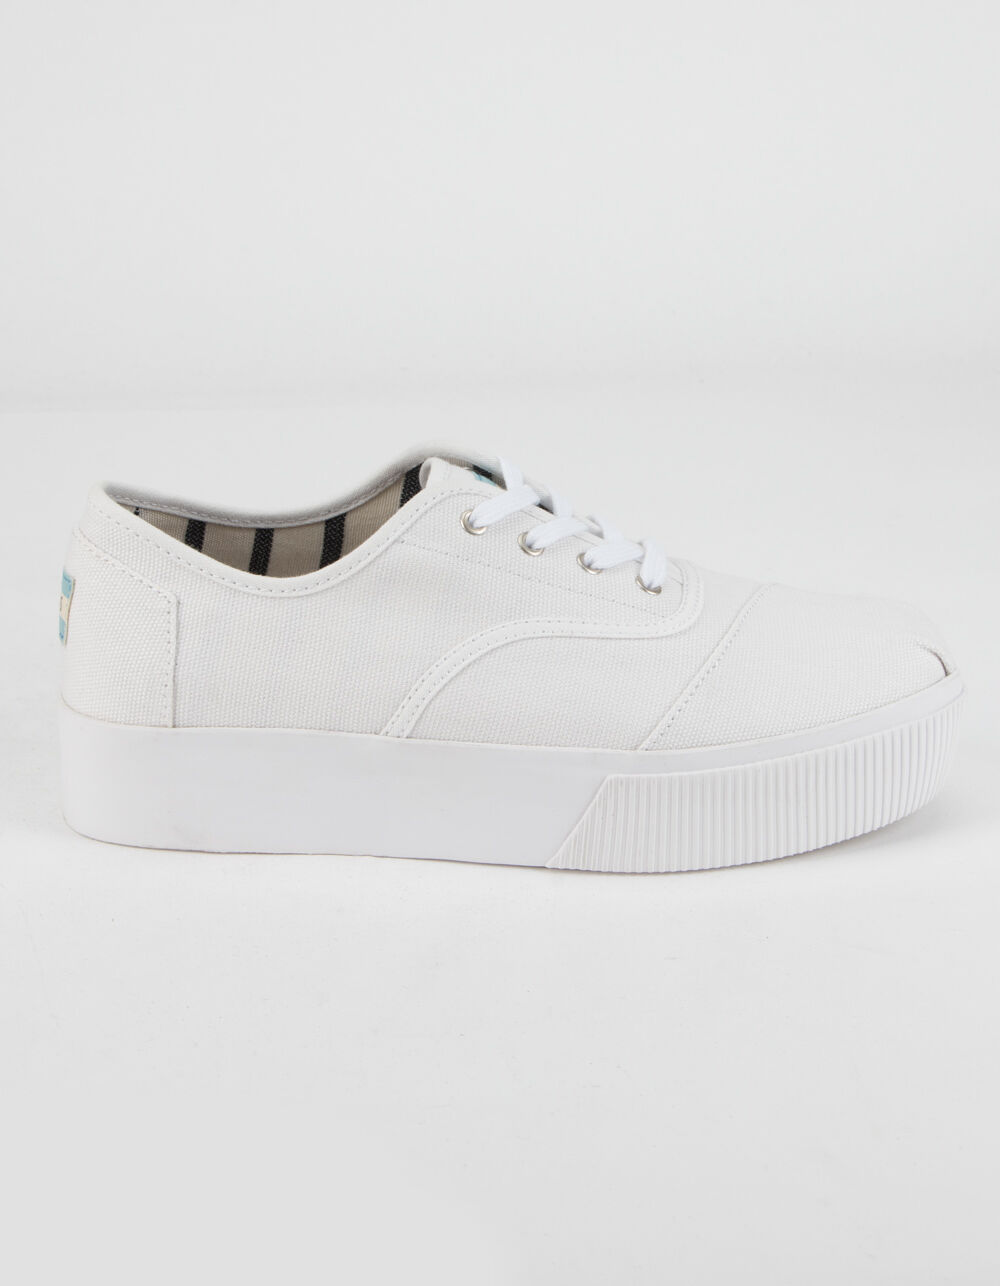 boardwalk white shoes